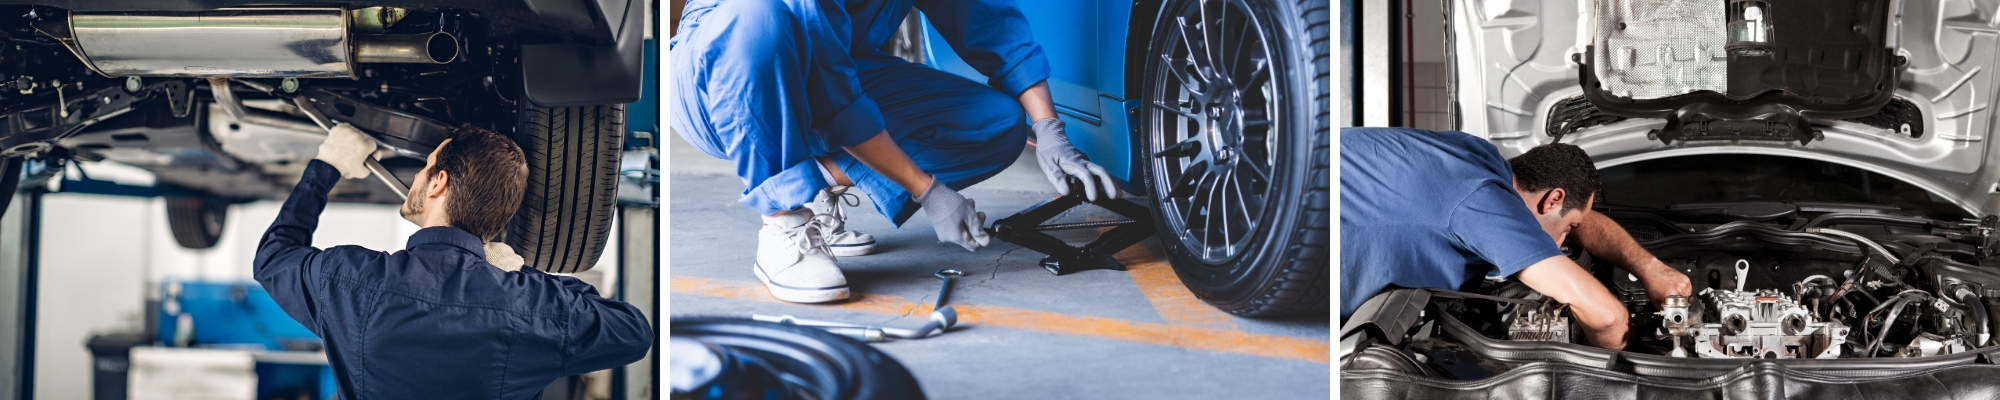 Auto Repair Business Loans